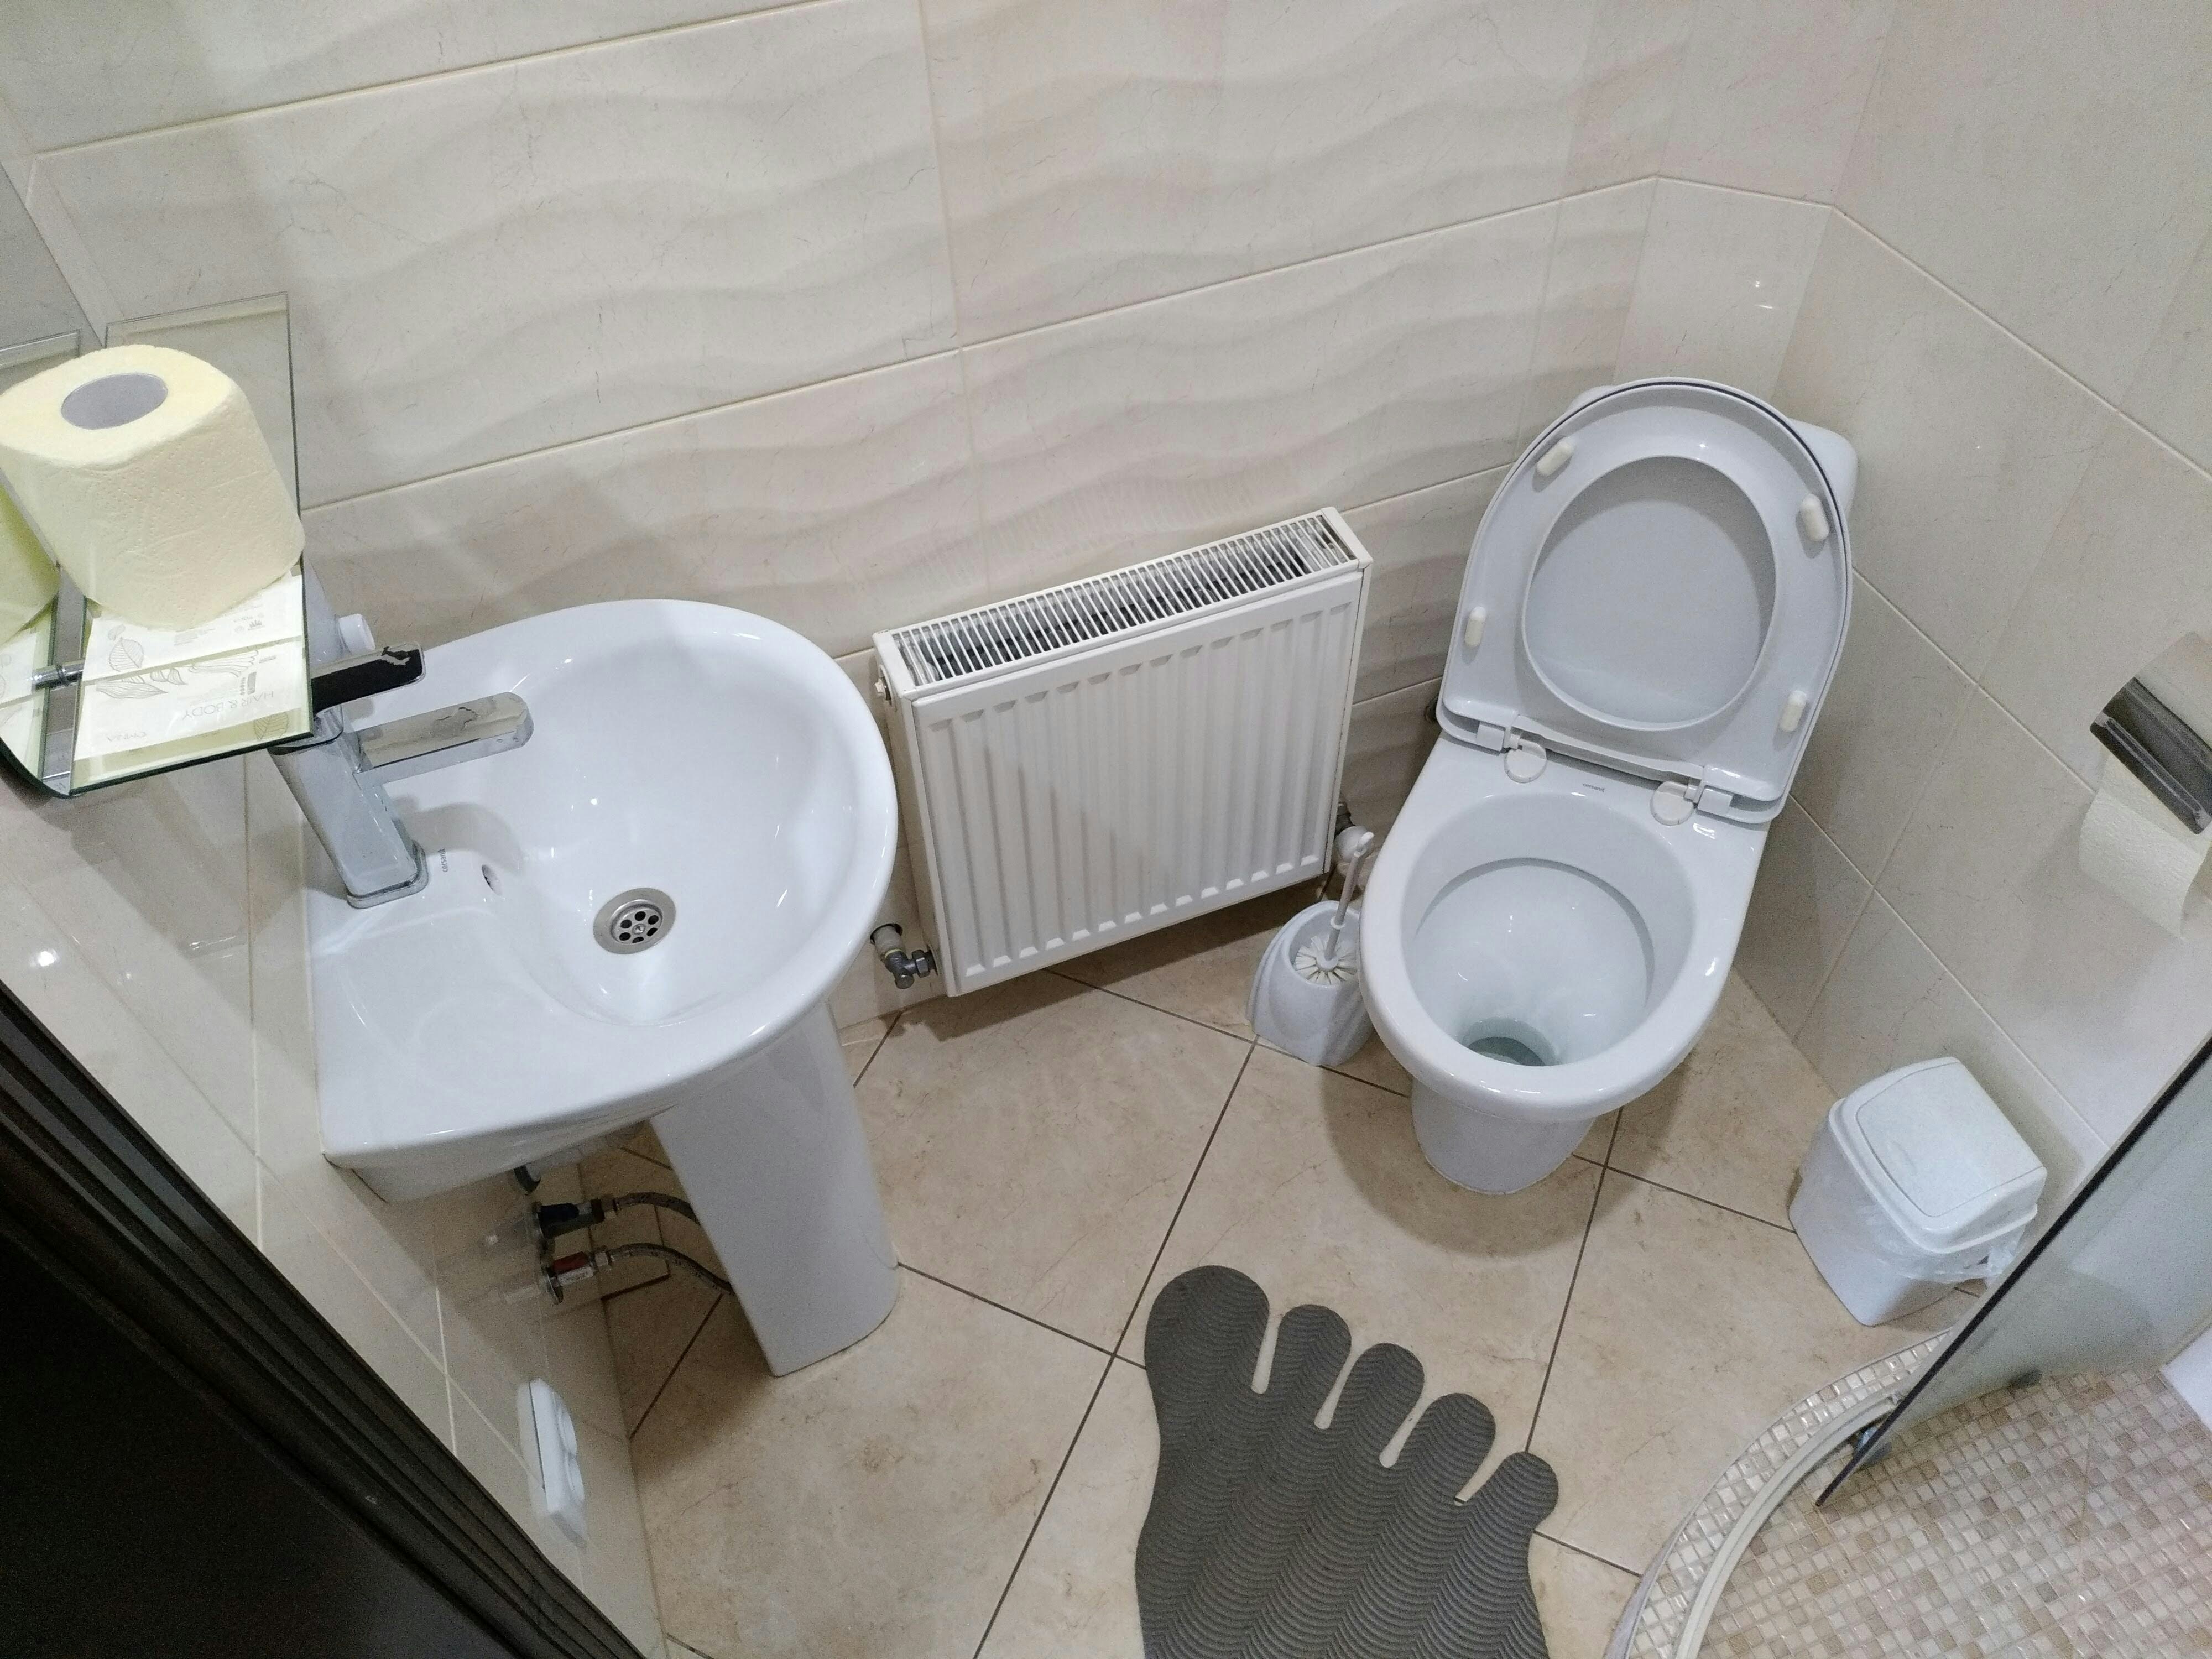 TOTO Washlet Bidet Seat in modern bathroom with bidet seats for toilets